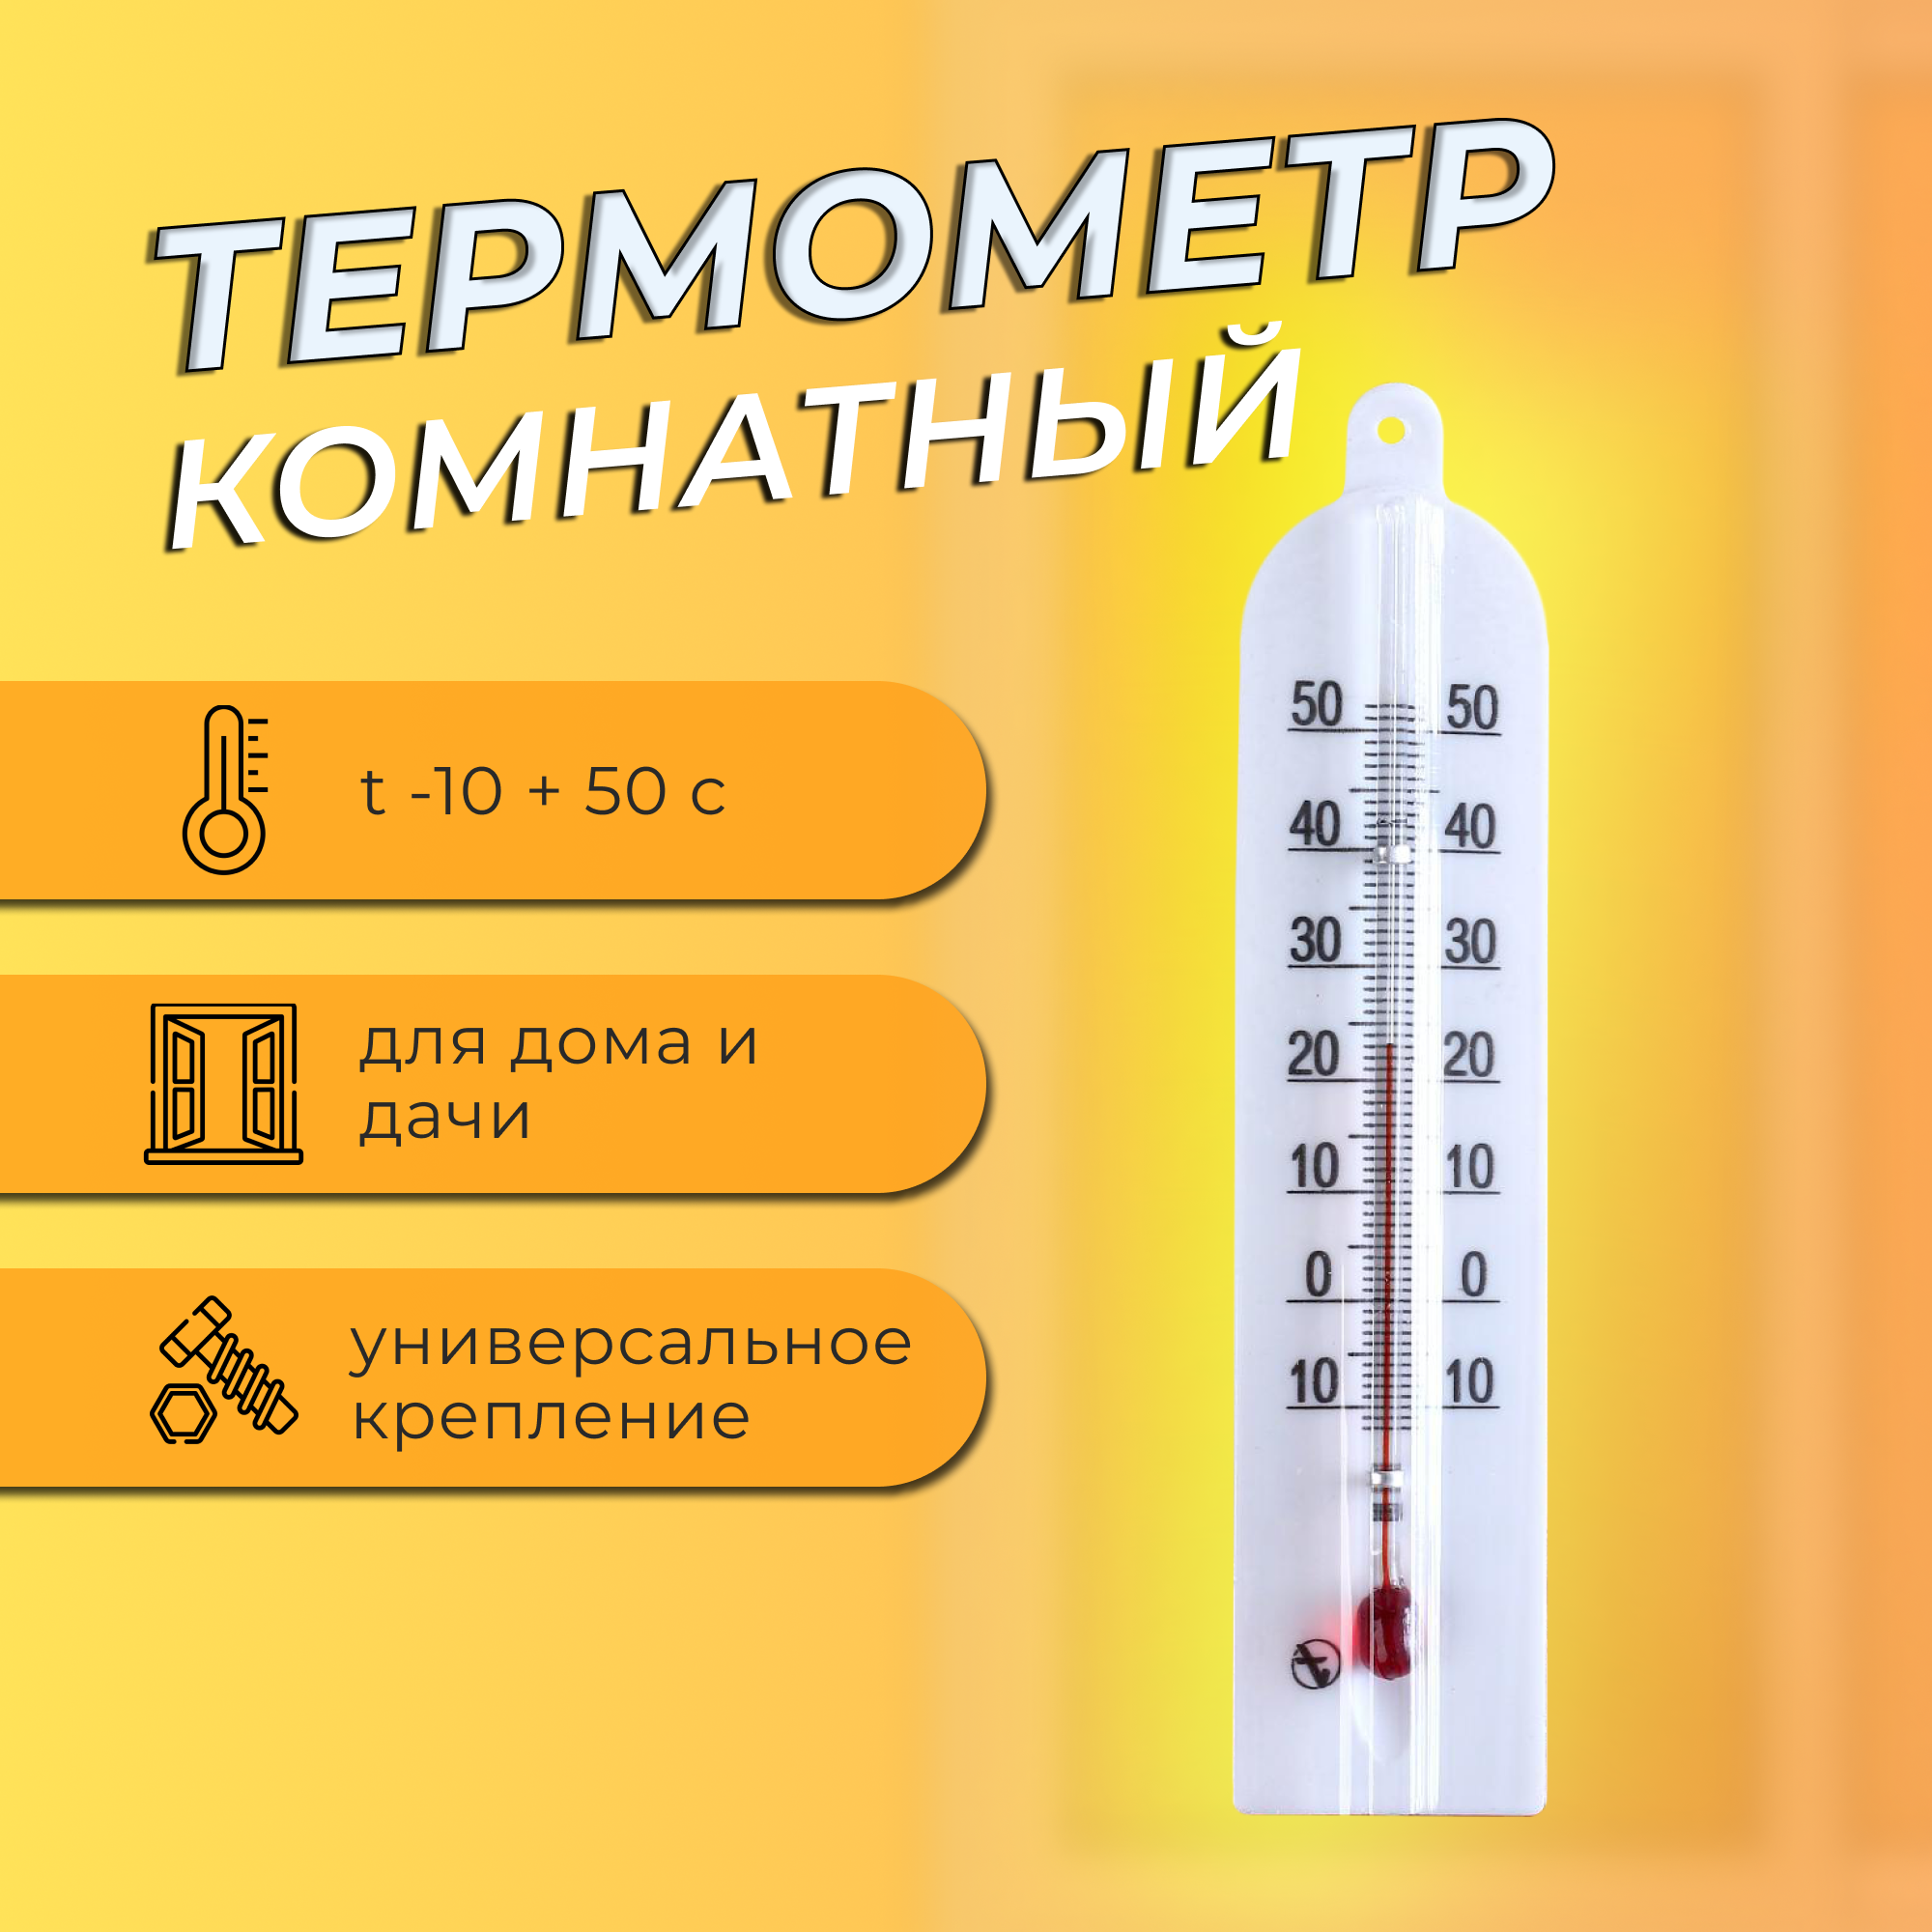 Термометр комнатный ТБ-189 "Модерн" (t -10 + 50 С) в блистере 2545525